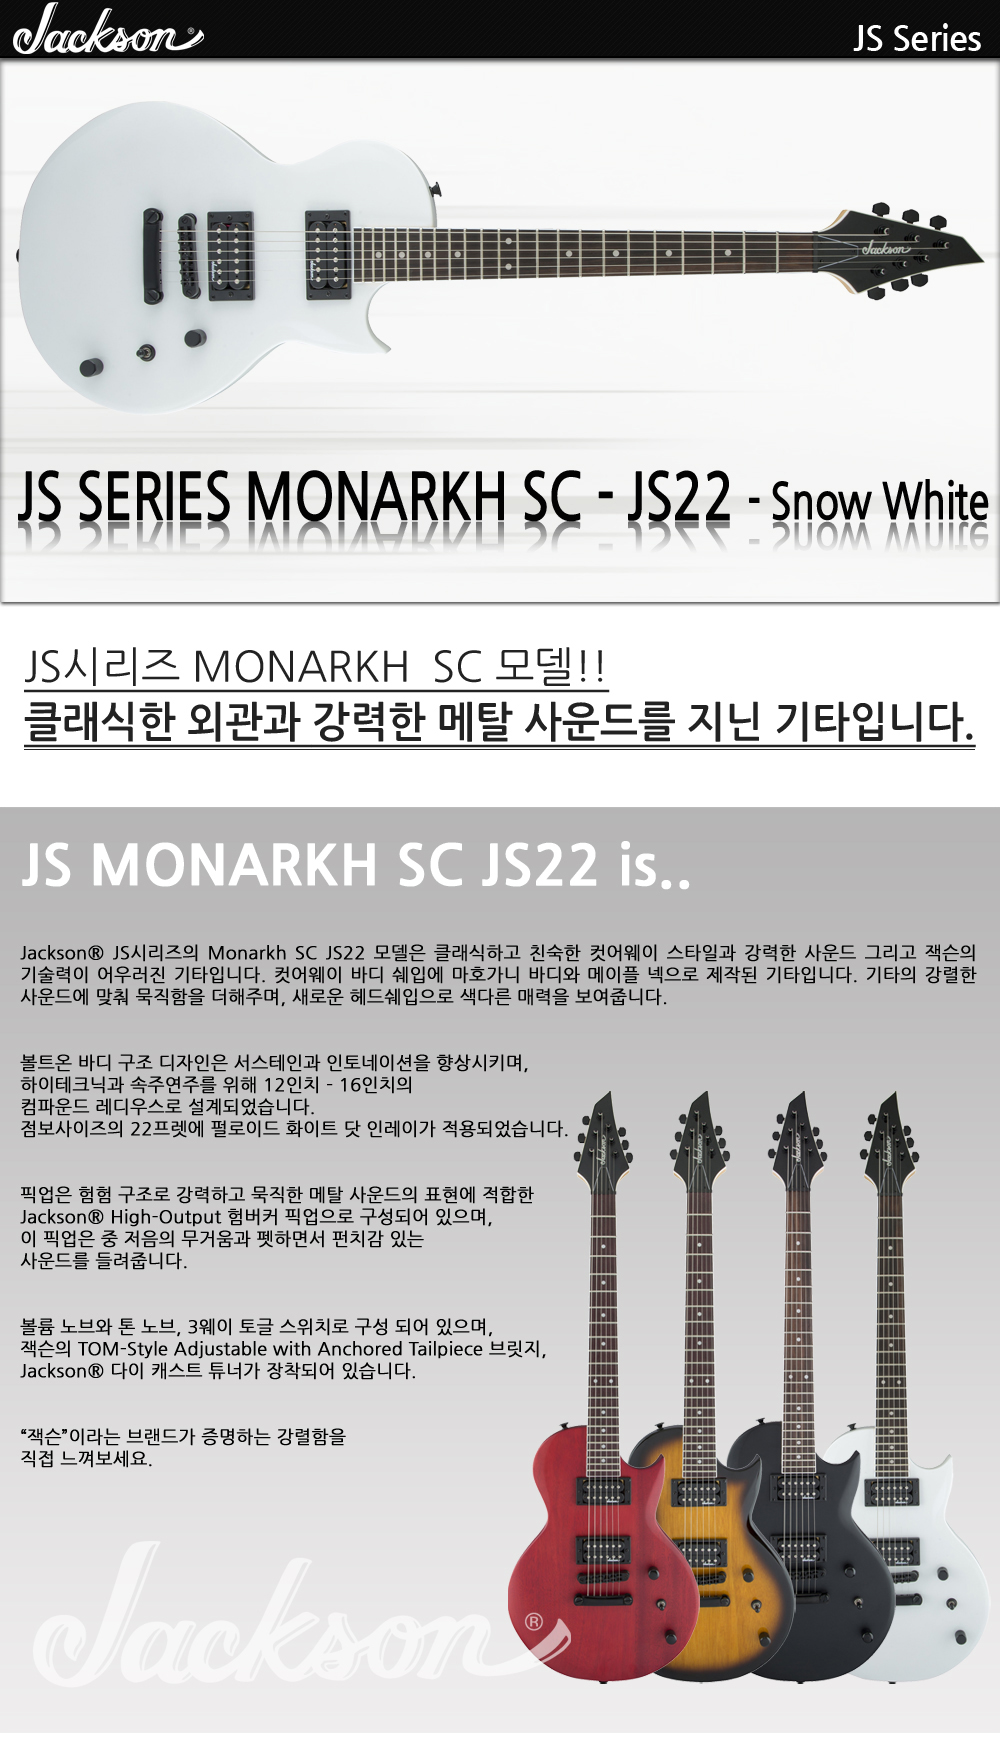 Jackson-JS-Monarkh-SC-JS22-SnowWhite_1_104858.jpg